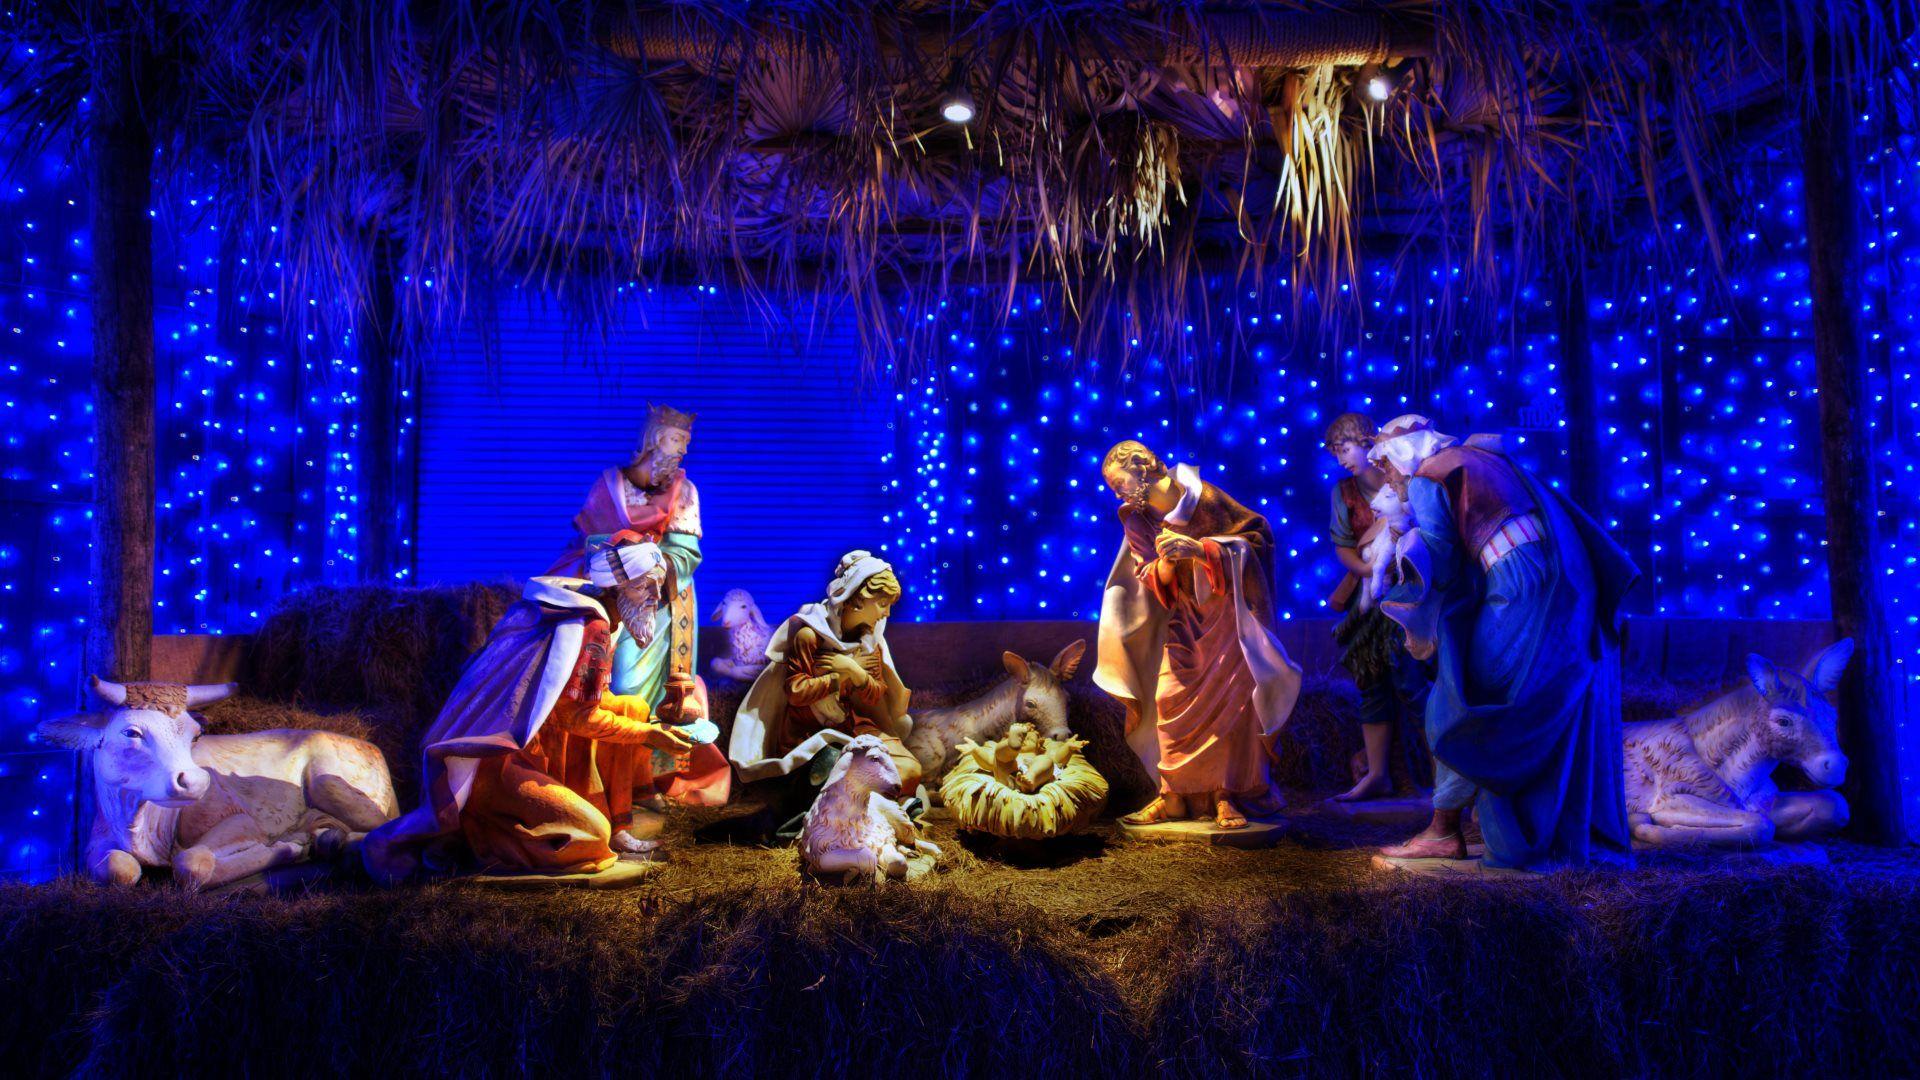 The Nativity Scene High definition HD 1080p: in 2019